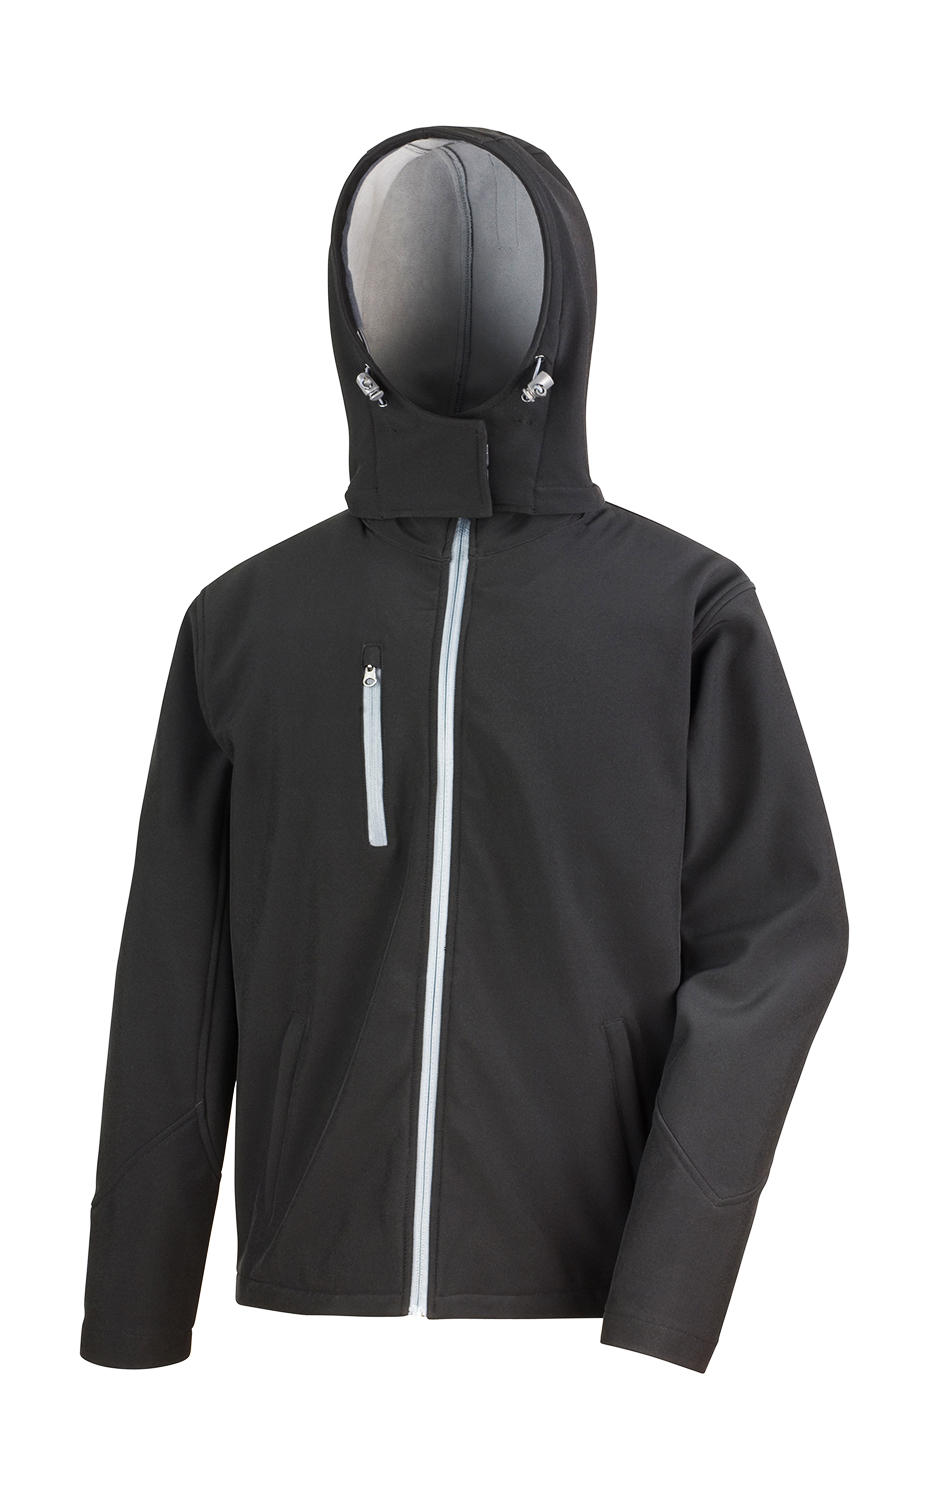  TX Performance Hooded Softshell Jacket in Farbe Black/Grey